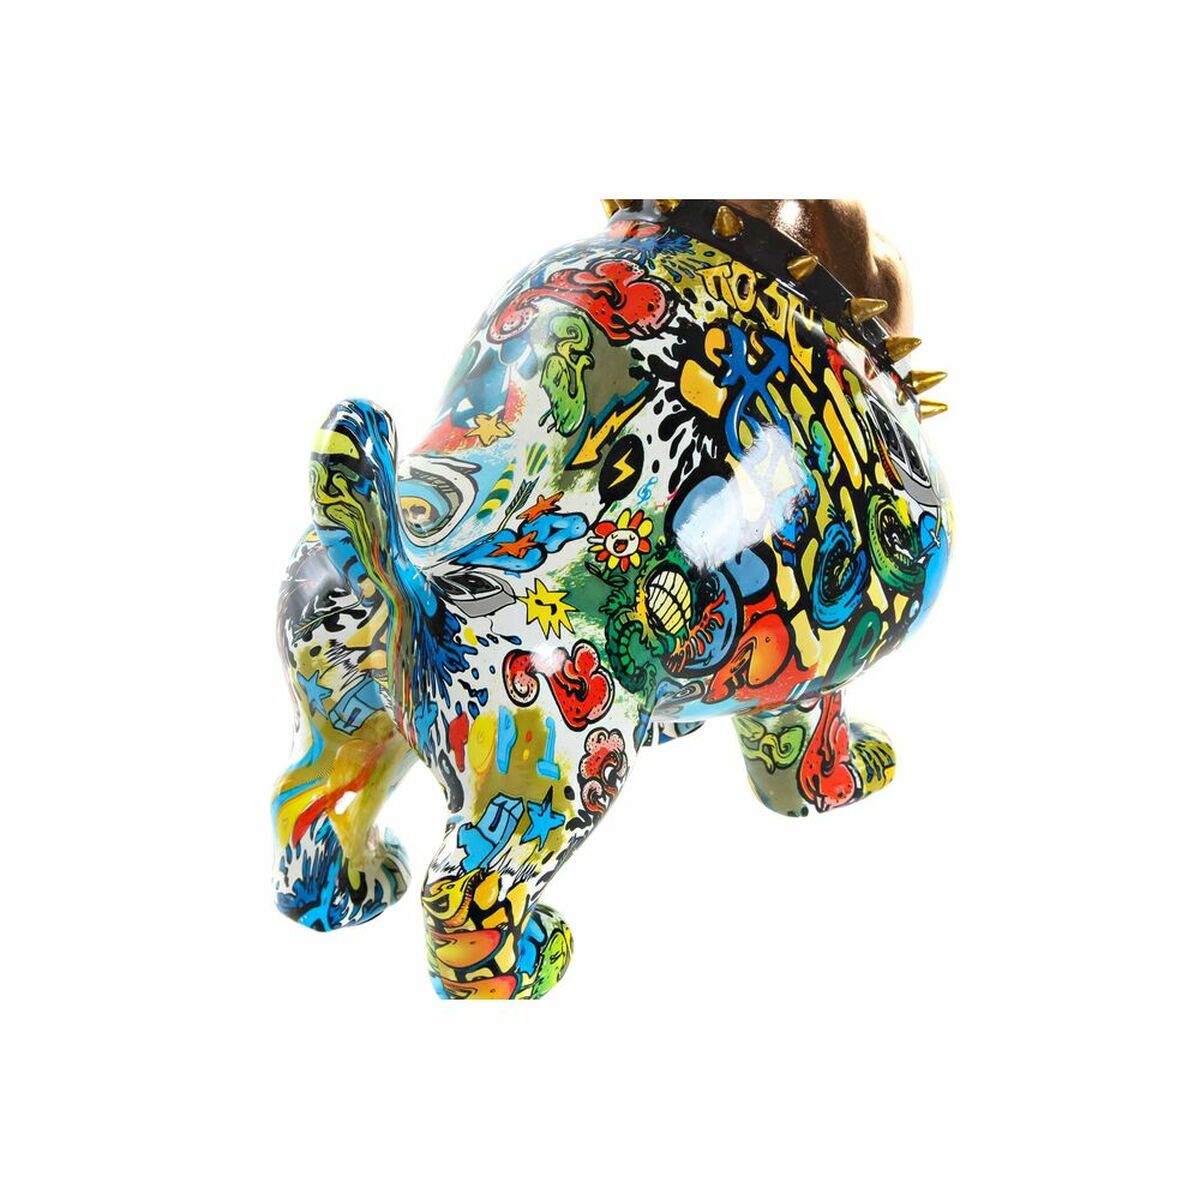 Figura Decorativa Perro Street Art Multicolor (21 x 15,5 x 20,5 cm)